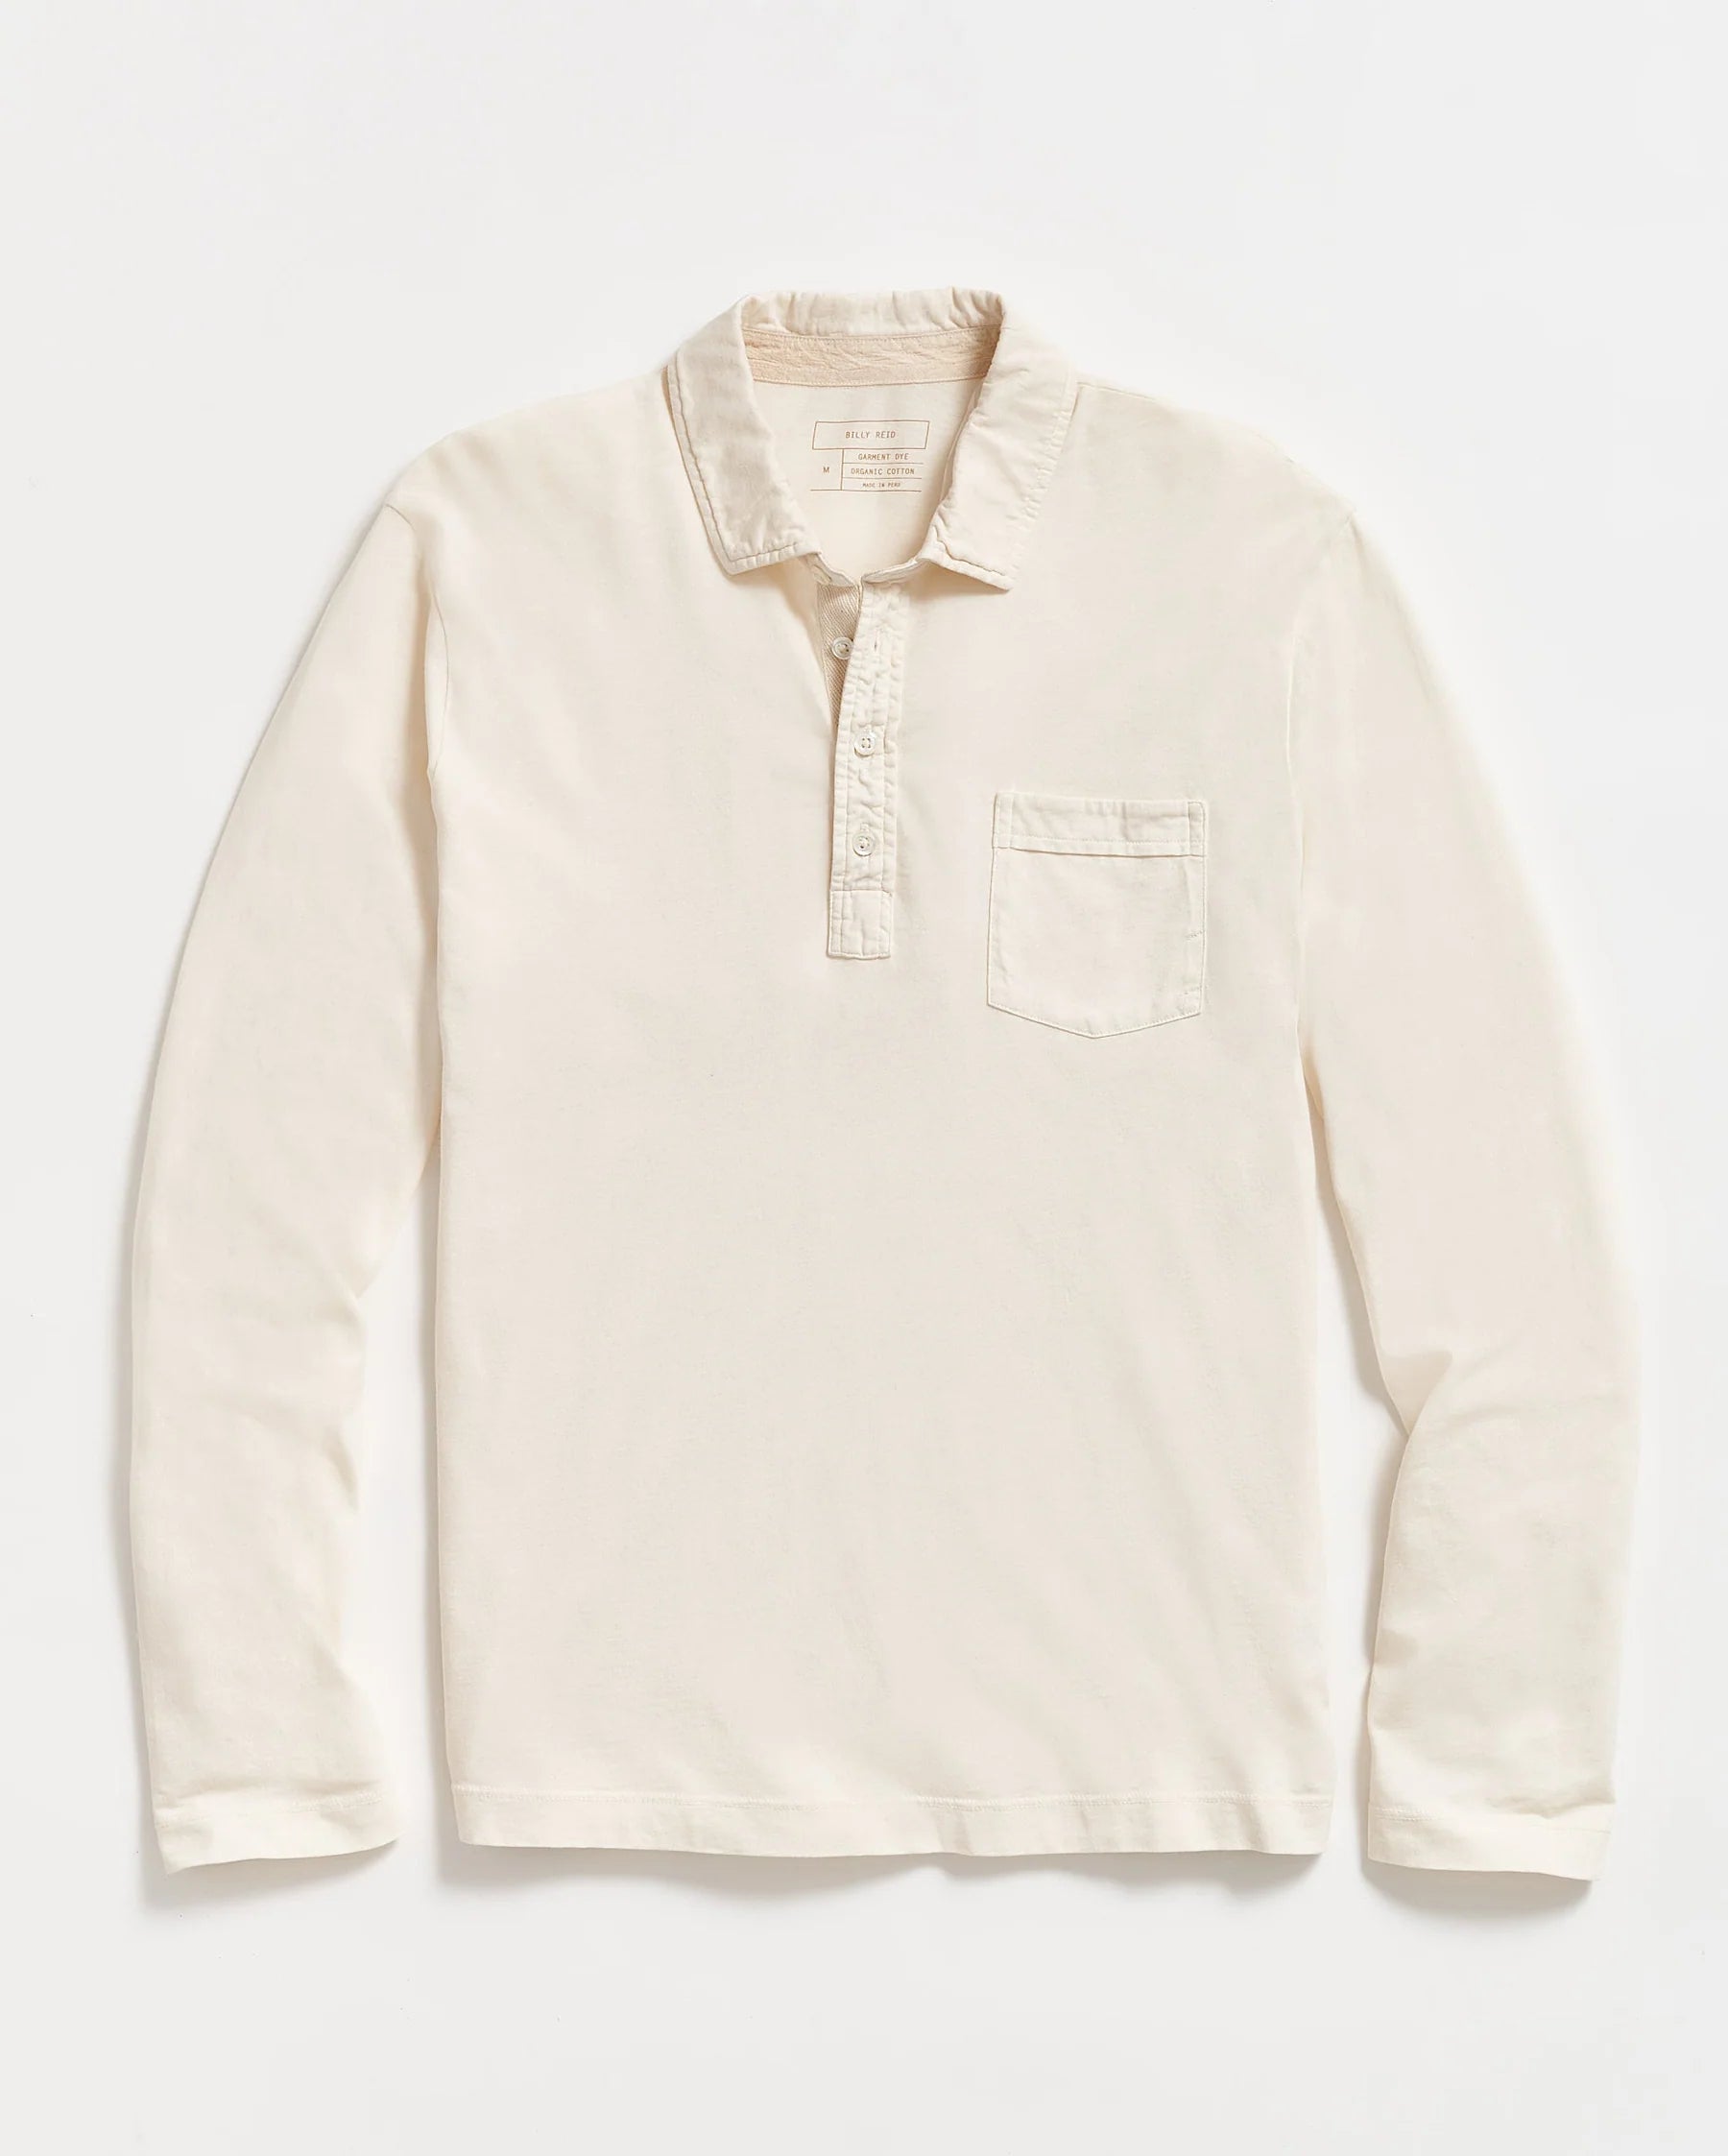 Pensacola L/S Polo CORE Shirt Billy Reid Tinted White S 